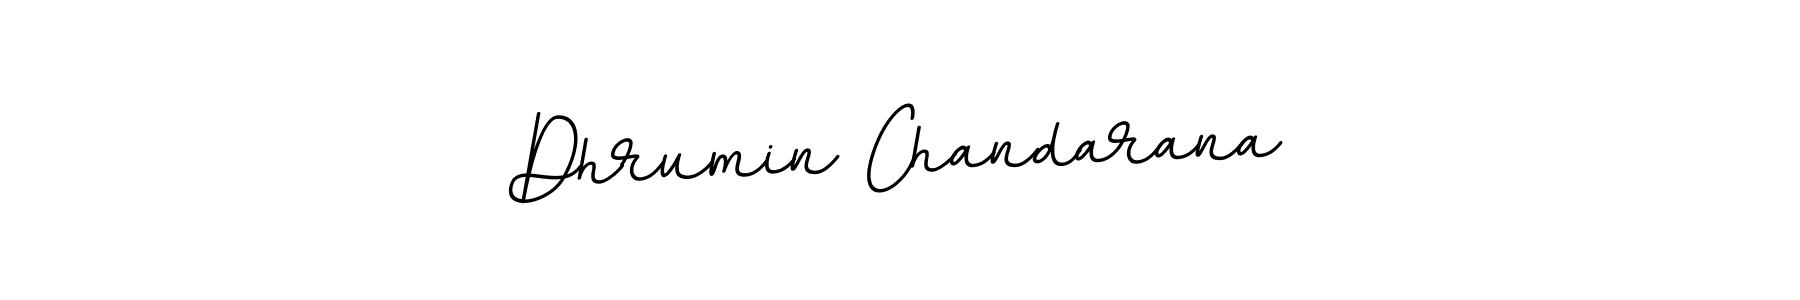 How to Draw Dhrumin Chandarana signature style? BallpointsItalic-DORy9 is a latest design signature styles for name Dhrumin Chandarana. Dhrumin Chandarana signature style 11 images and pictures png